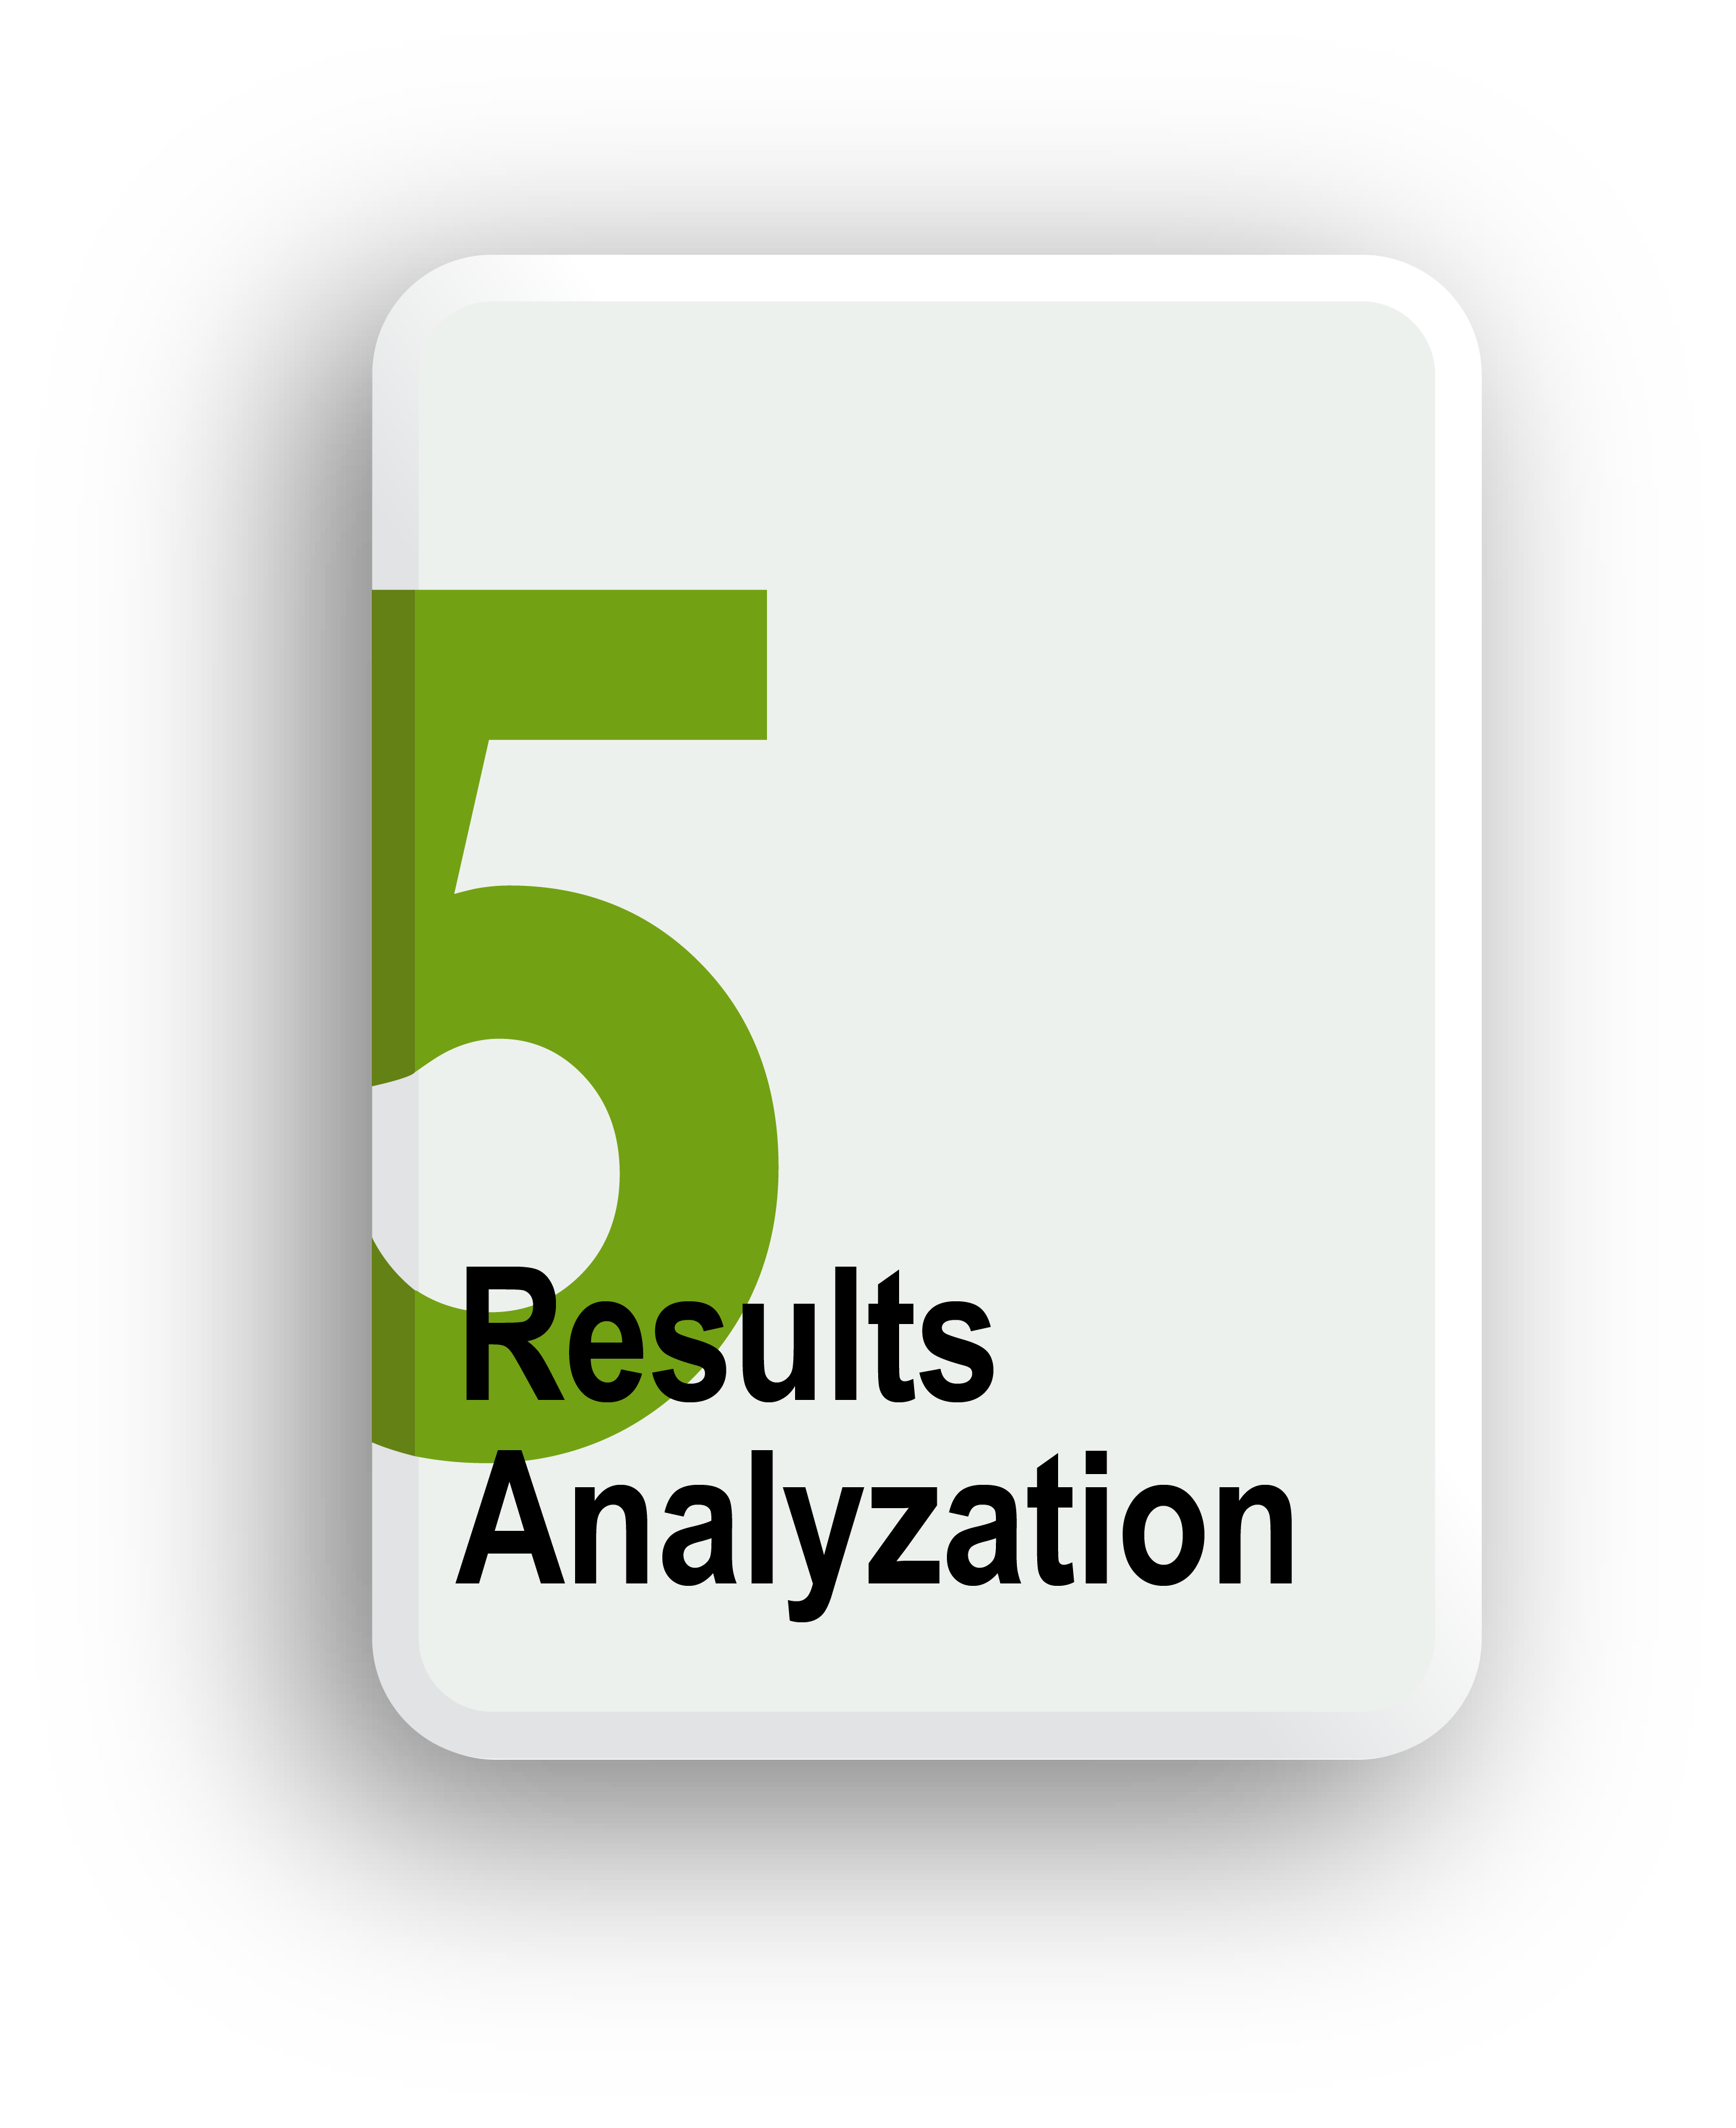 Results Analyzation